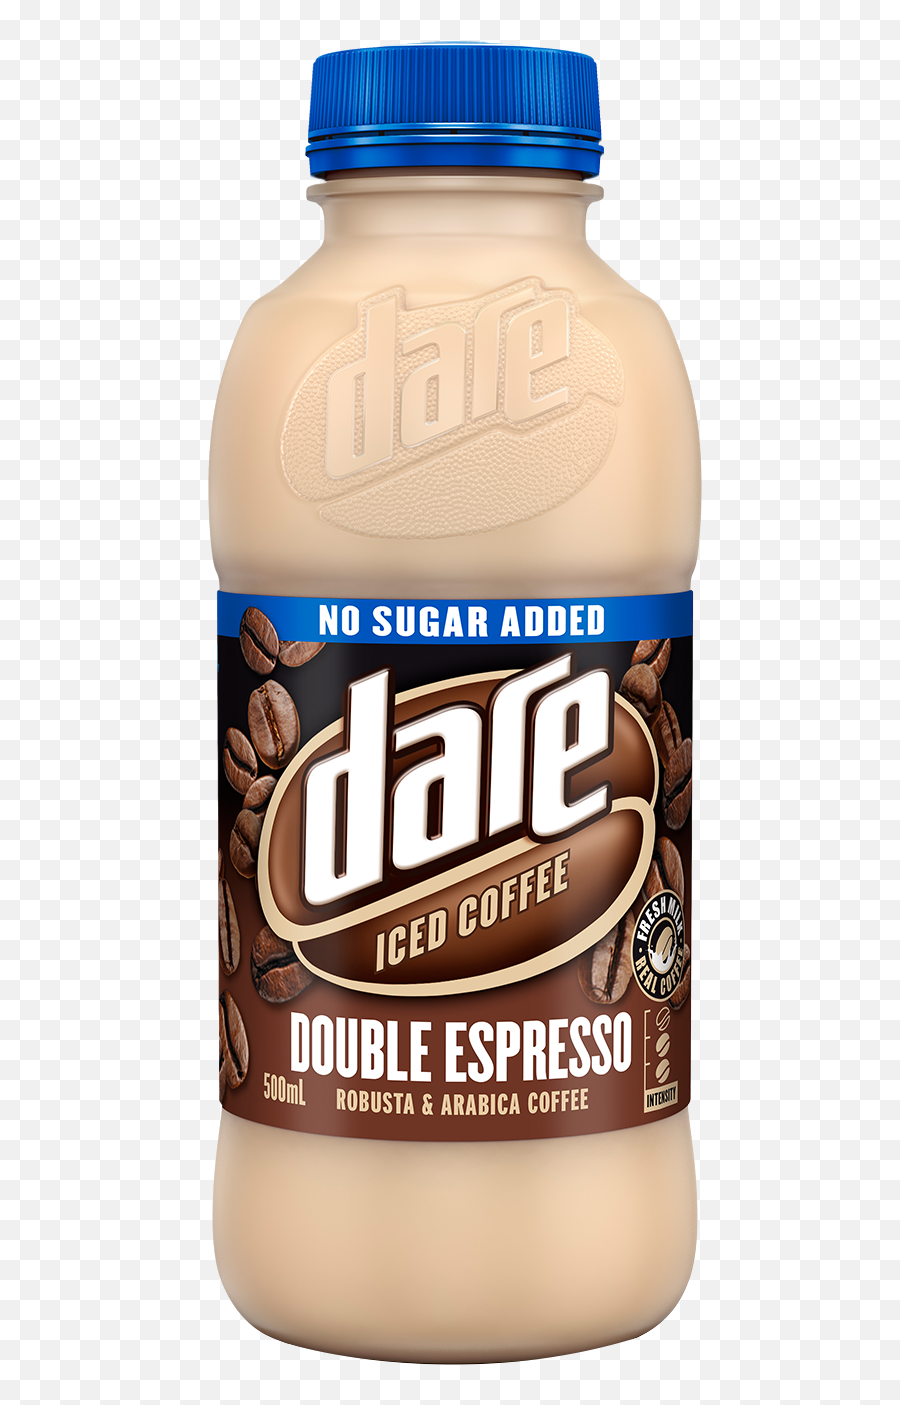 Dare Iced Coffee - Dare Iced Coffee No Added Sugar Png,Iced Coffee Png